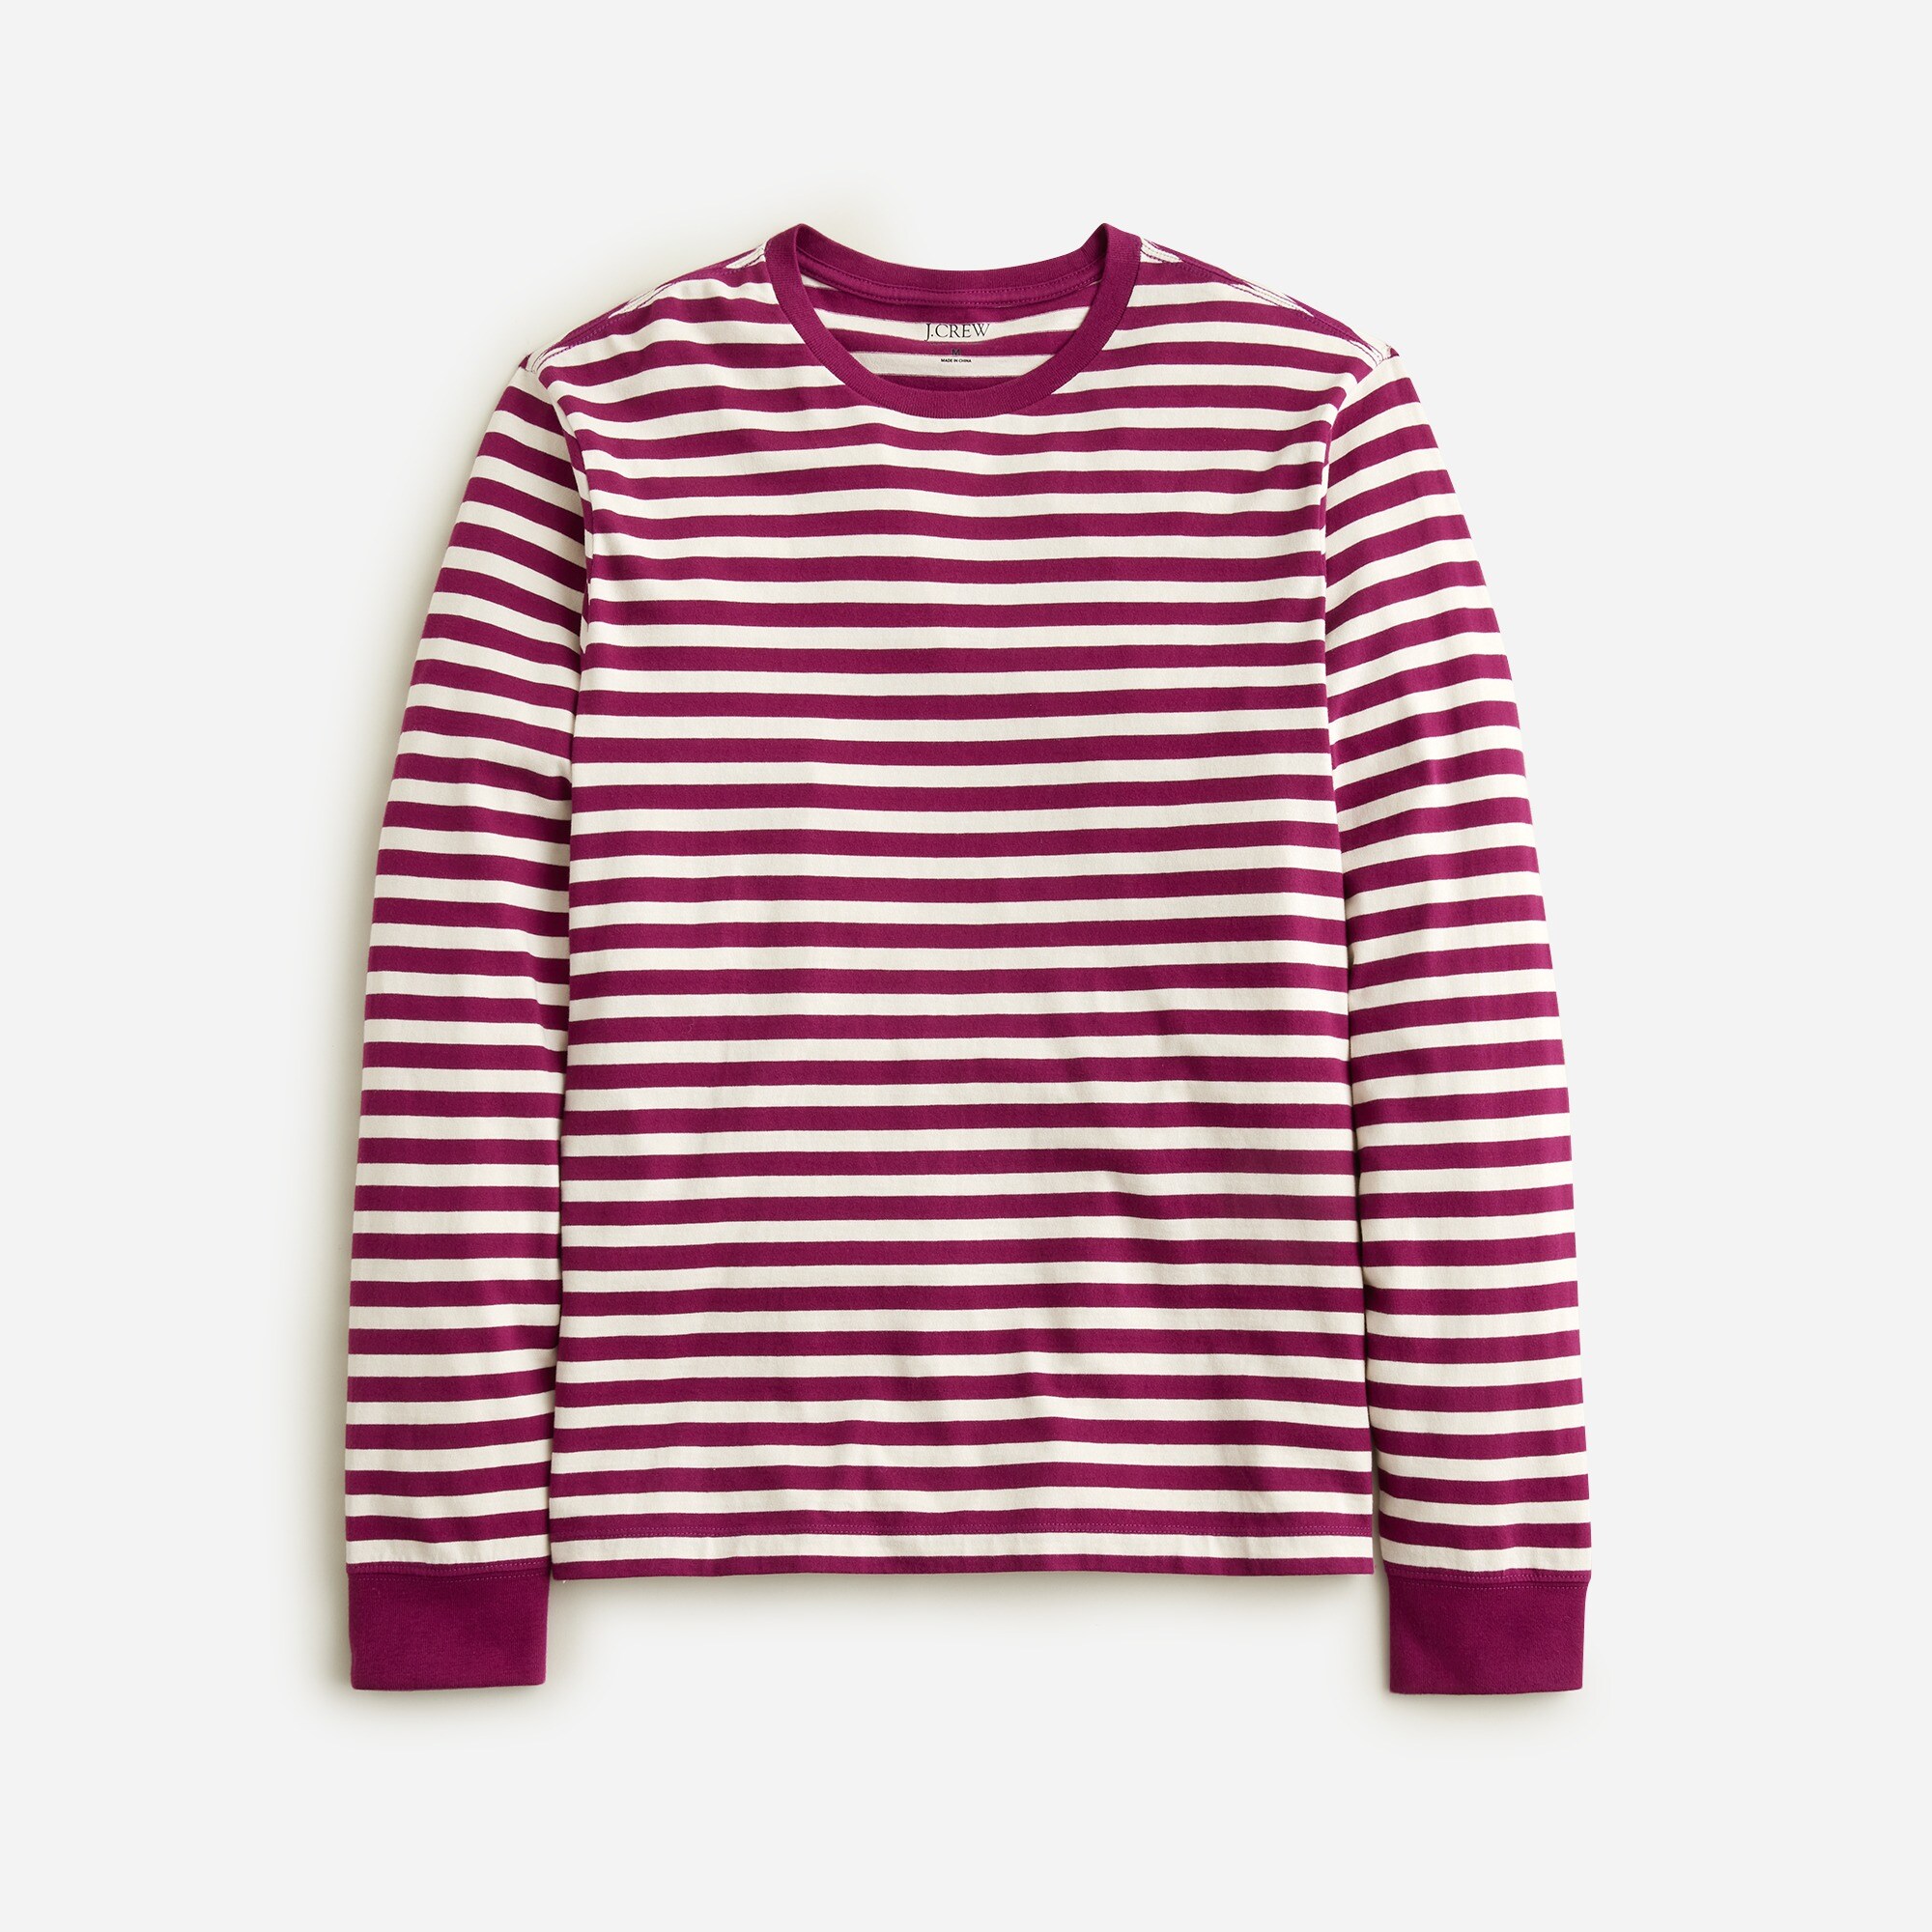  Long-sleeve cotton T-shirt in stripe